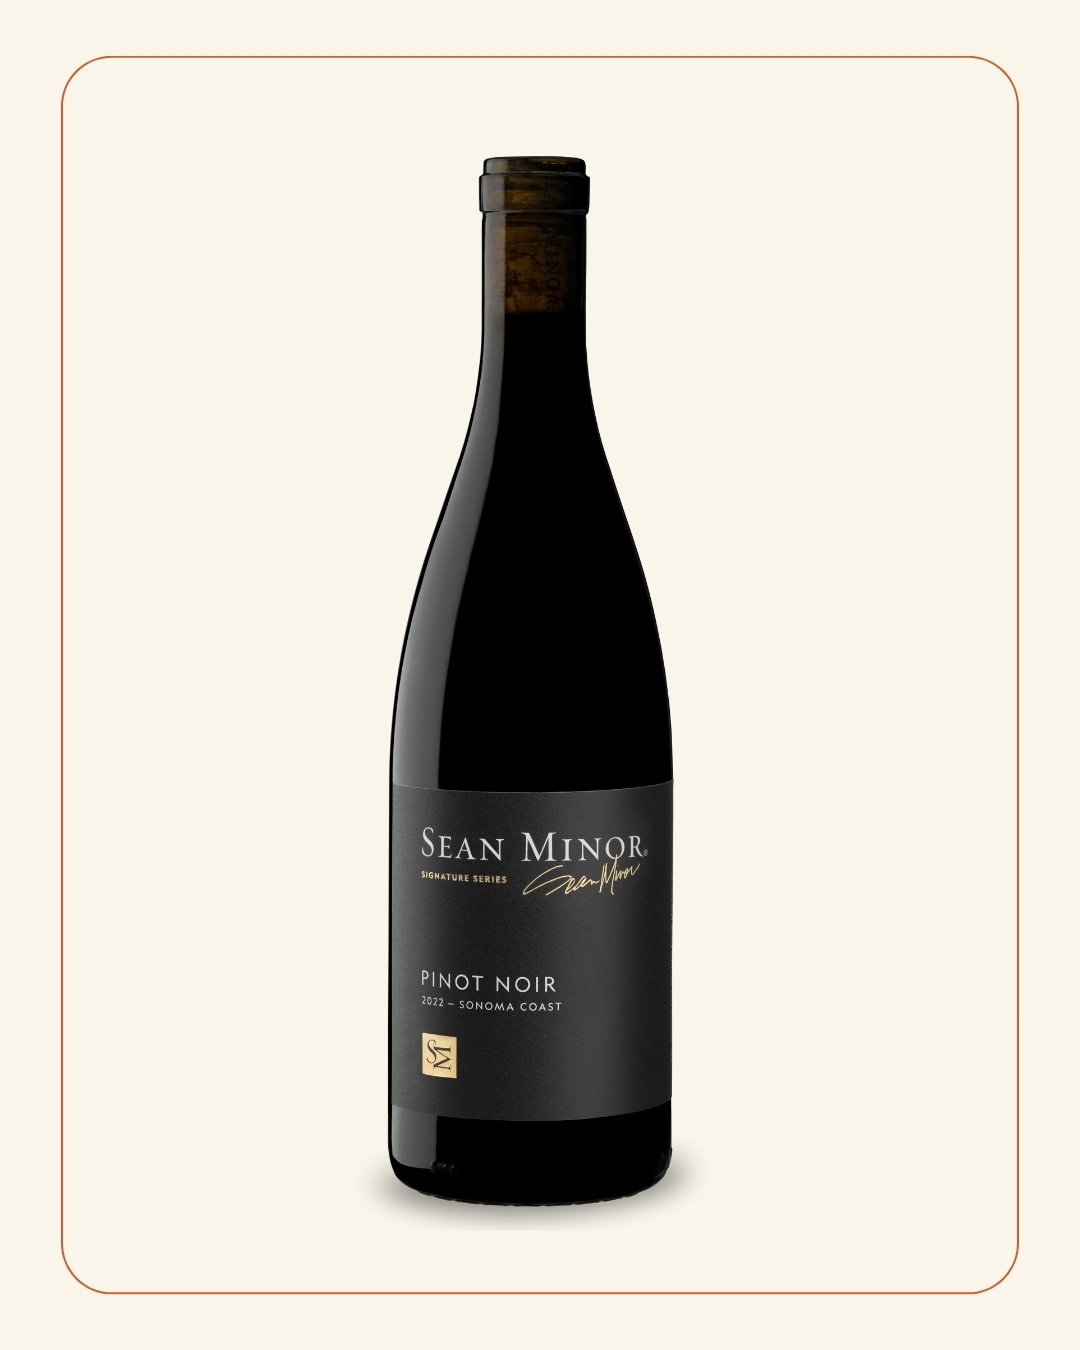  Sean Minor Wines